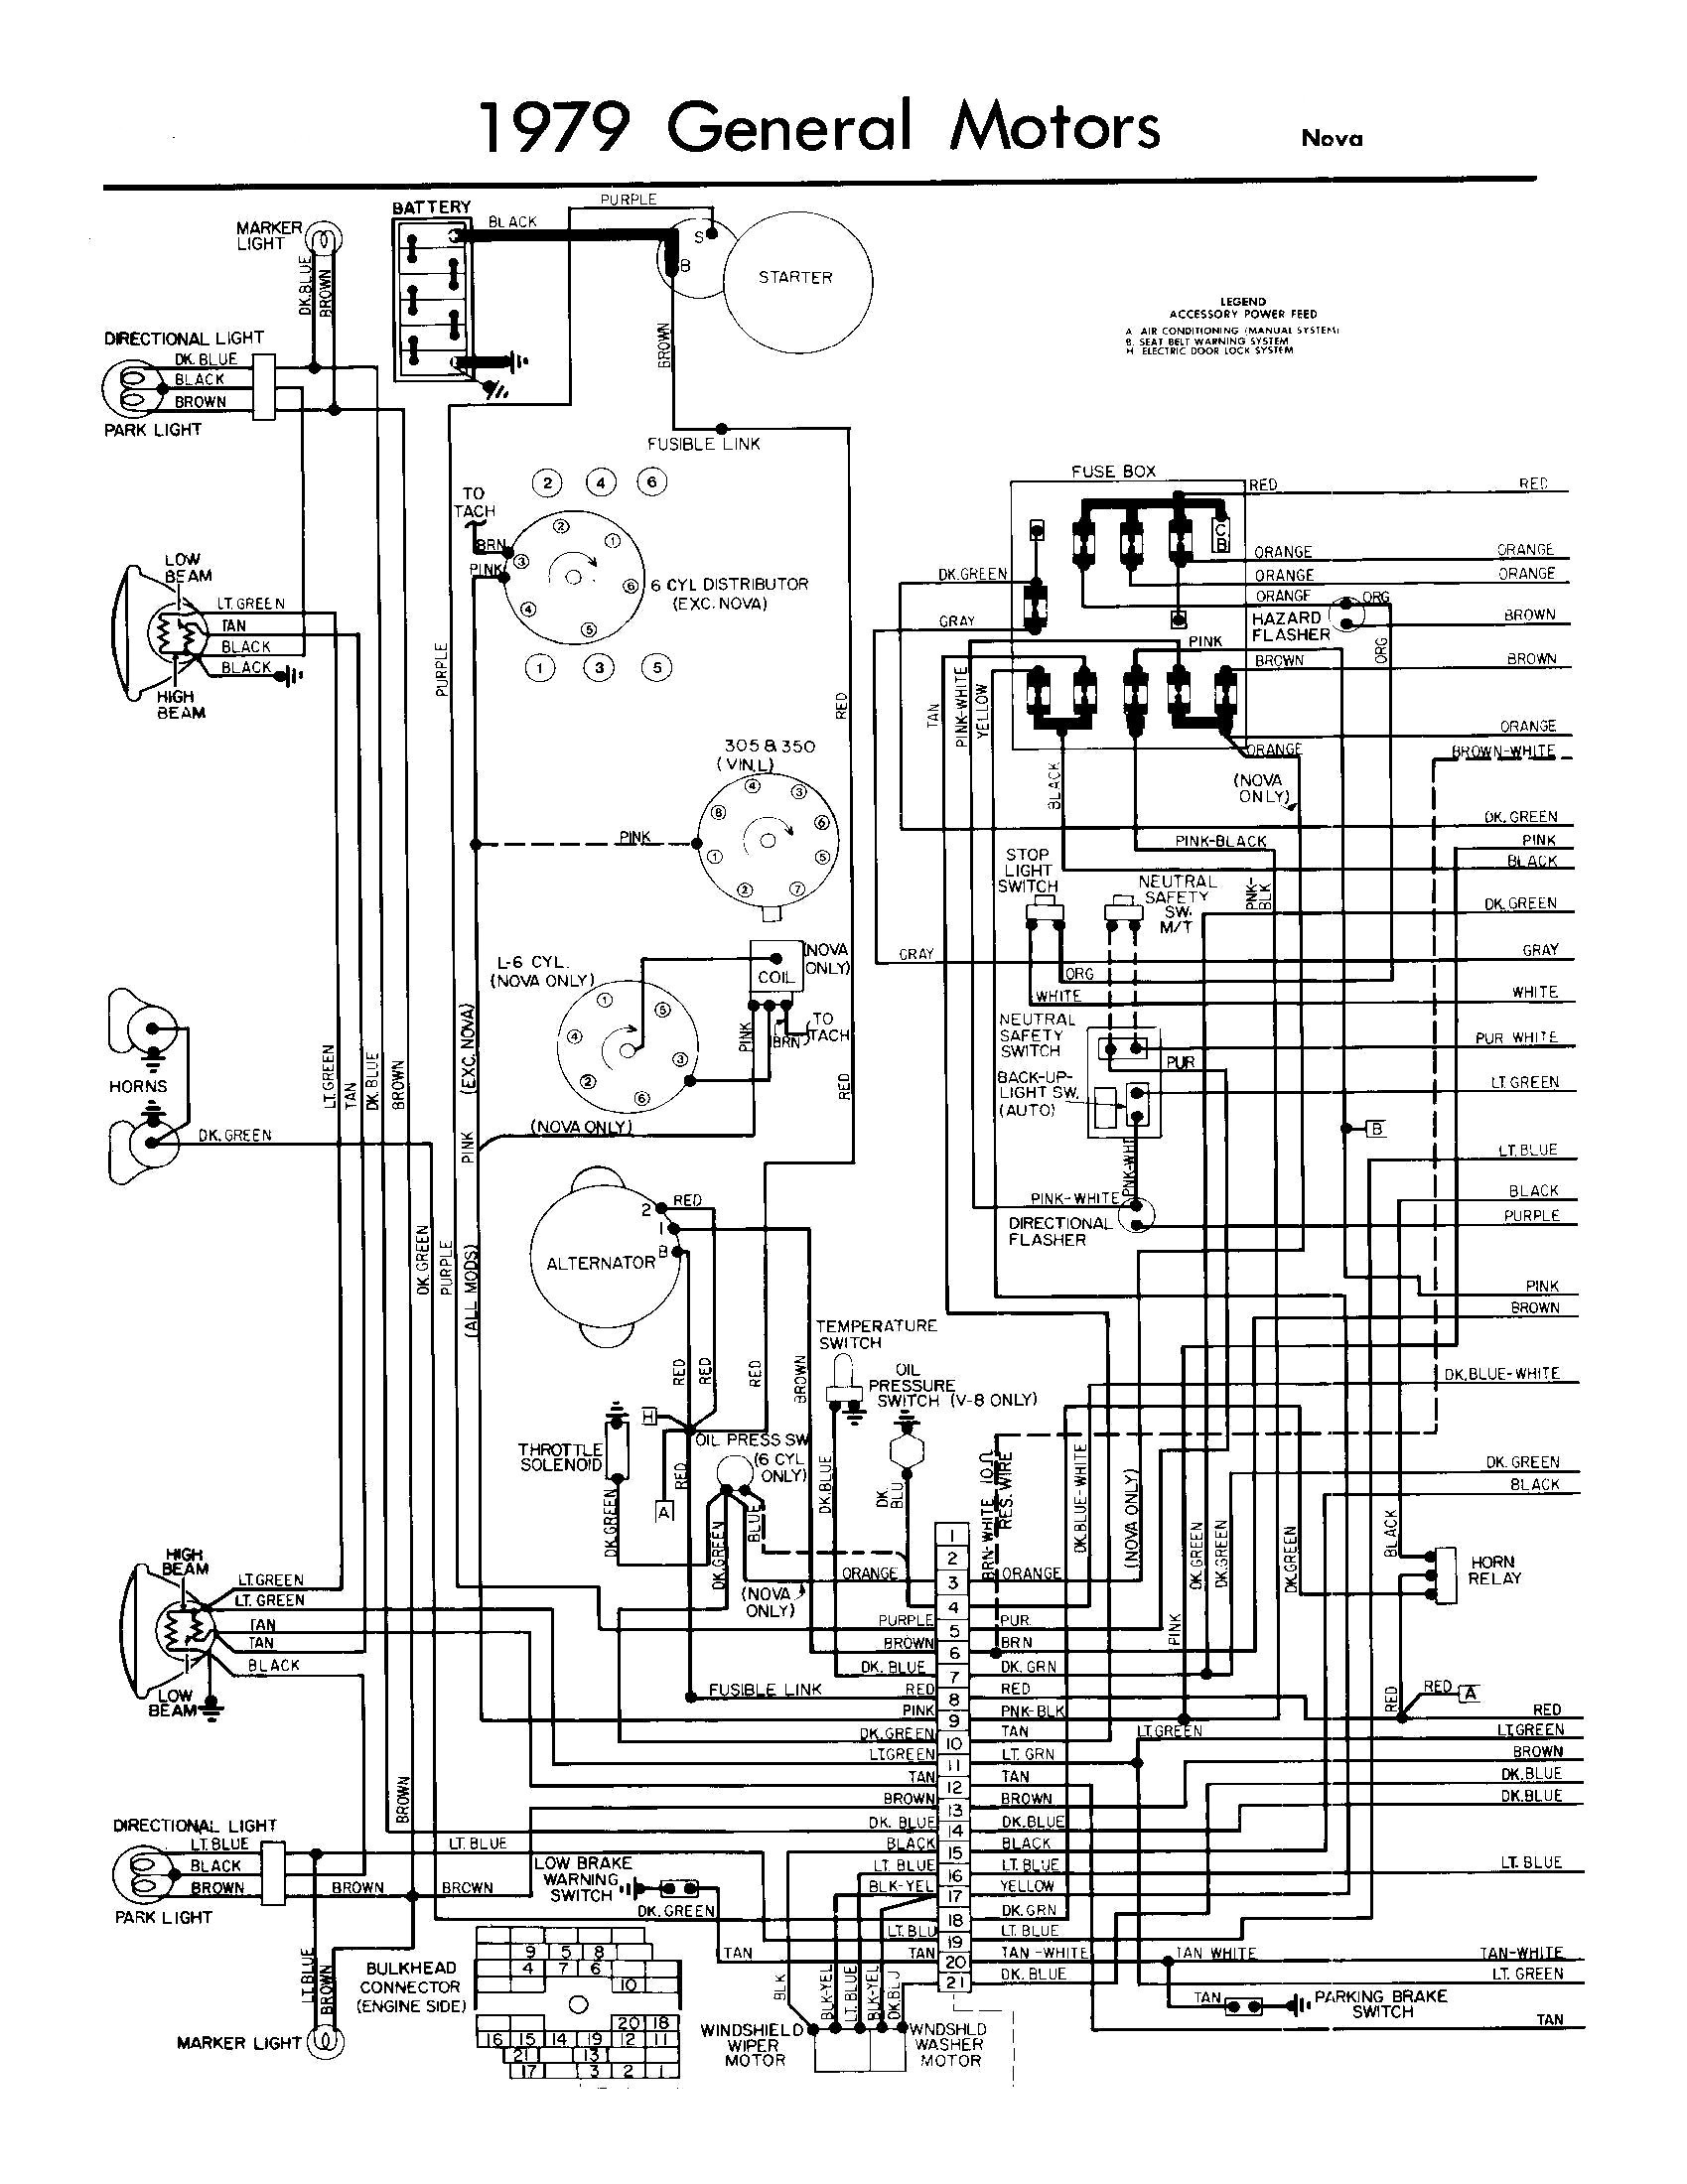 General Motors Parts Diagrams 2018 Chevrolet Performance Parts Catalog Beautiful Chevy Van Parts